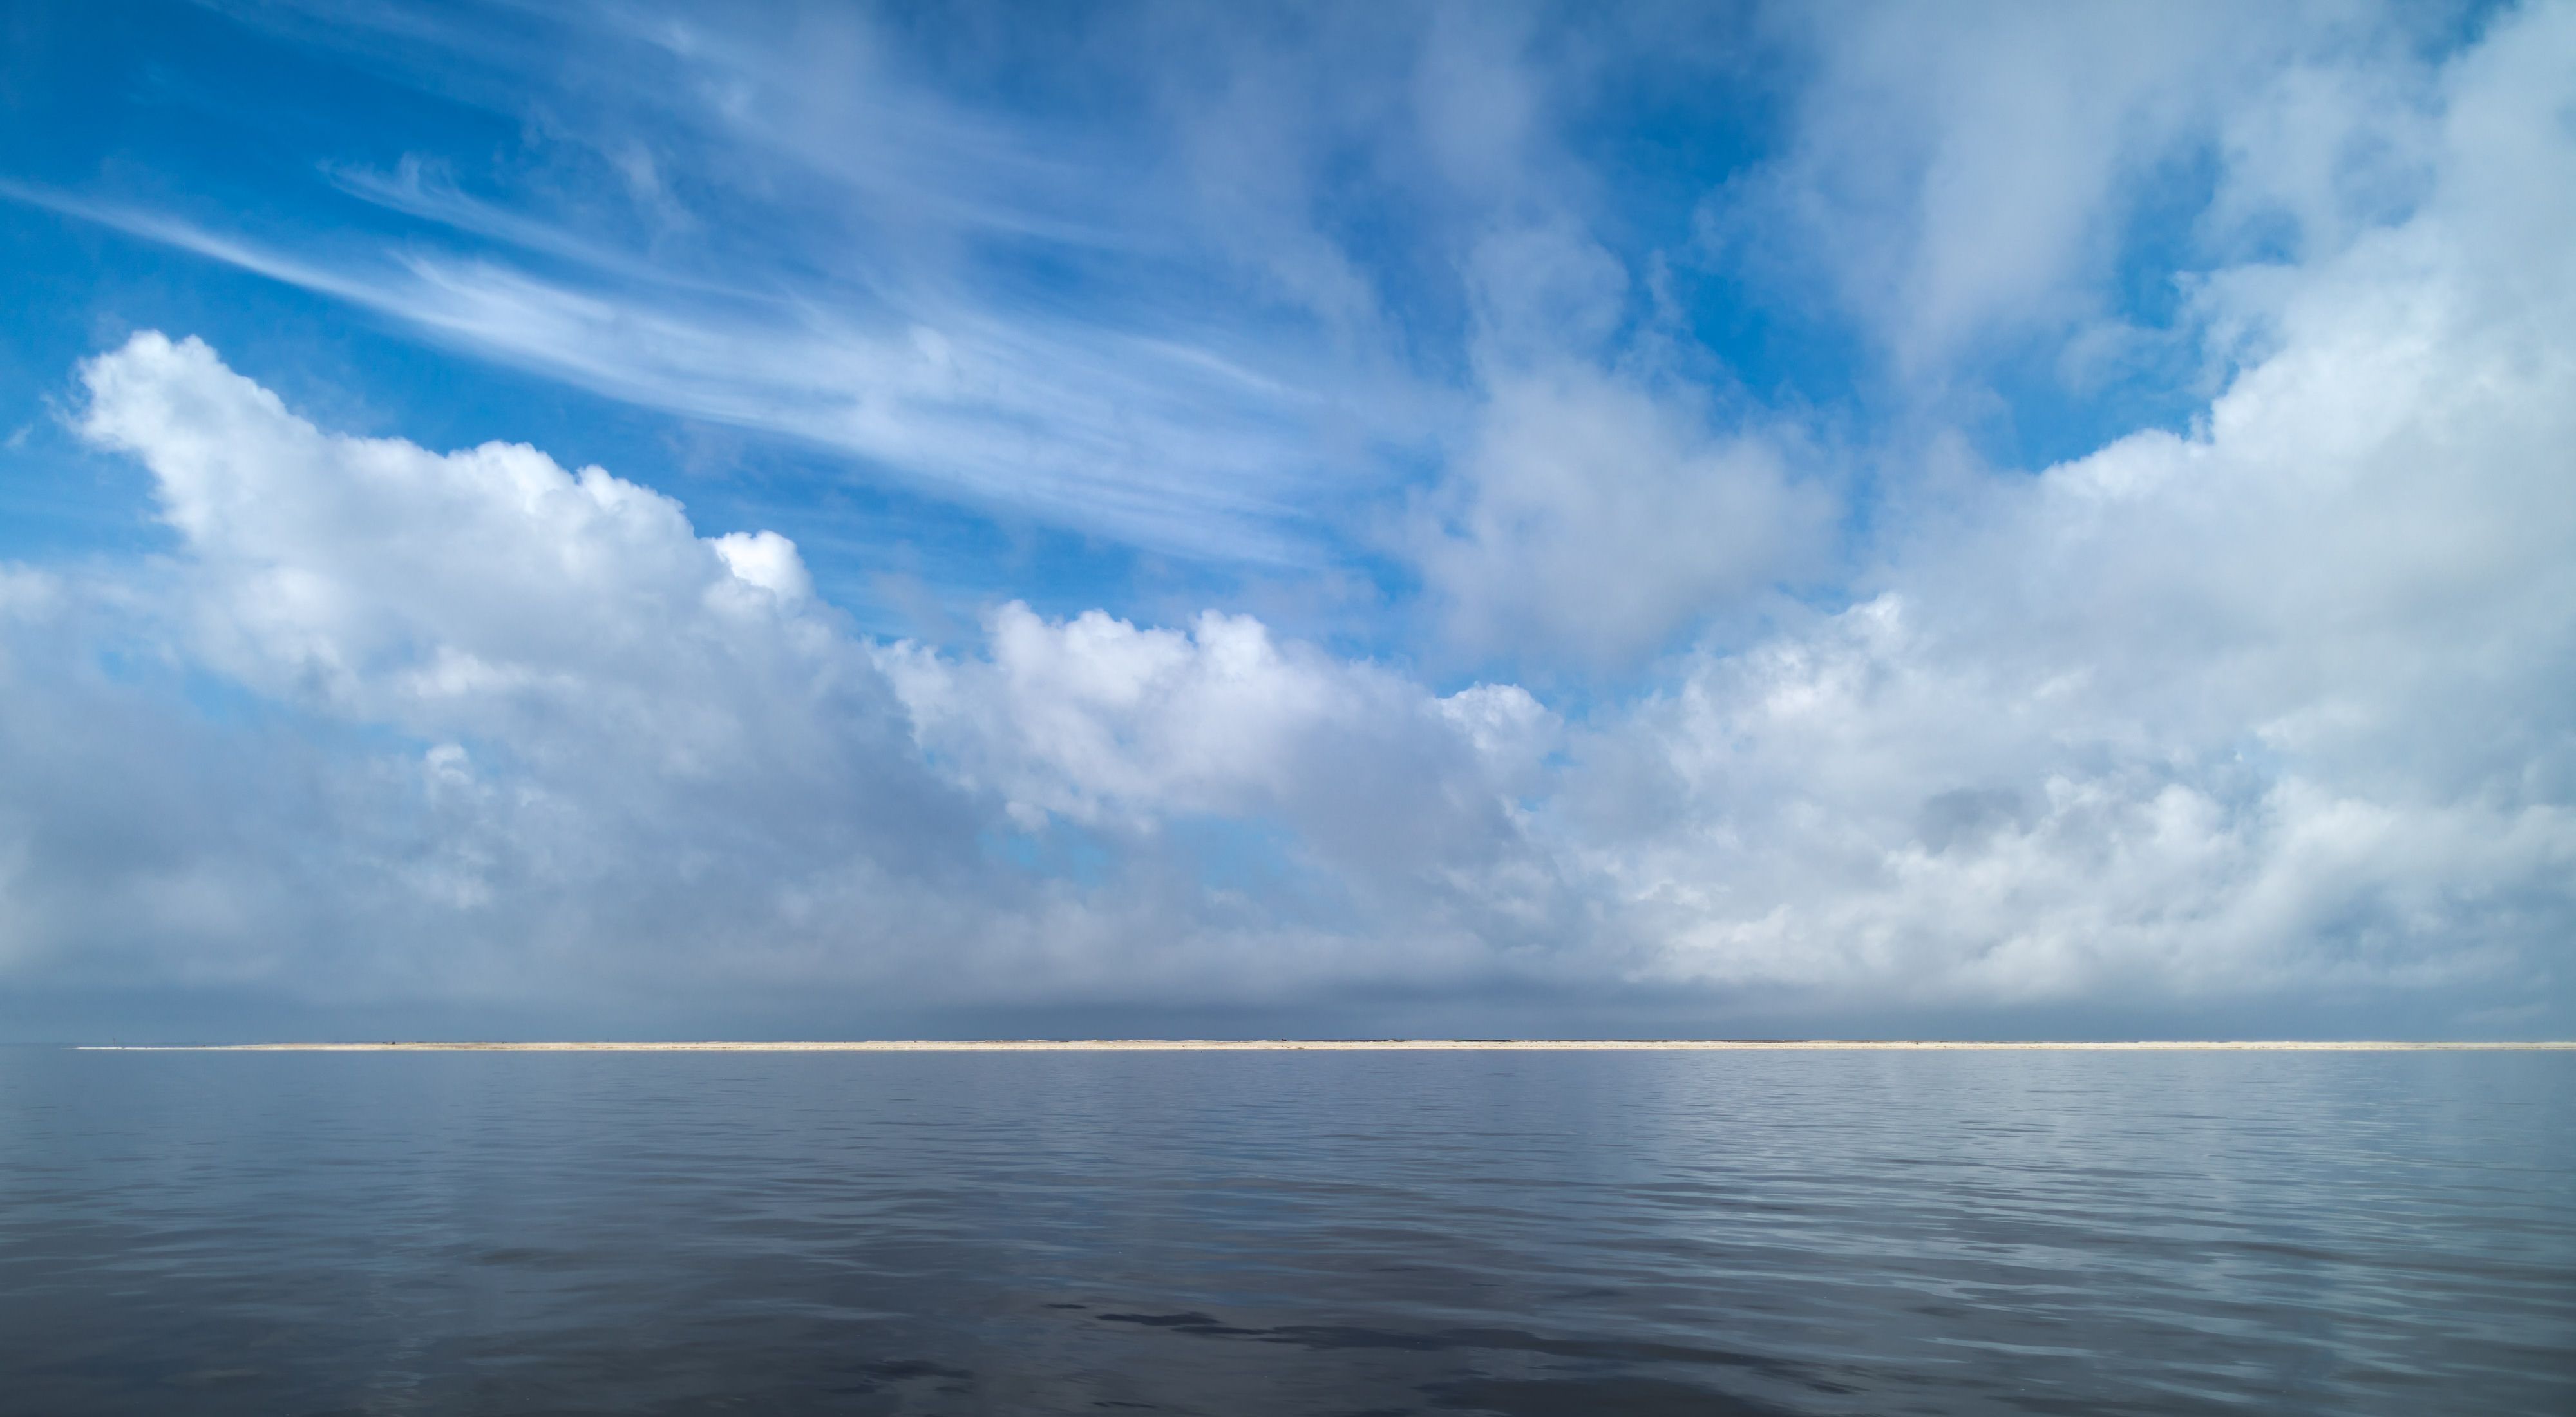 New Round Island near Pascagoula, Mississippi, looks like a sandbar between blue ocean and blue sky